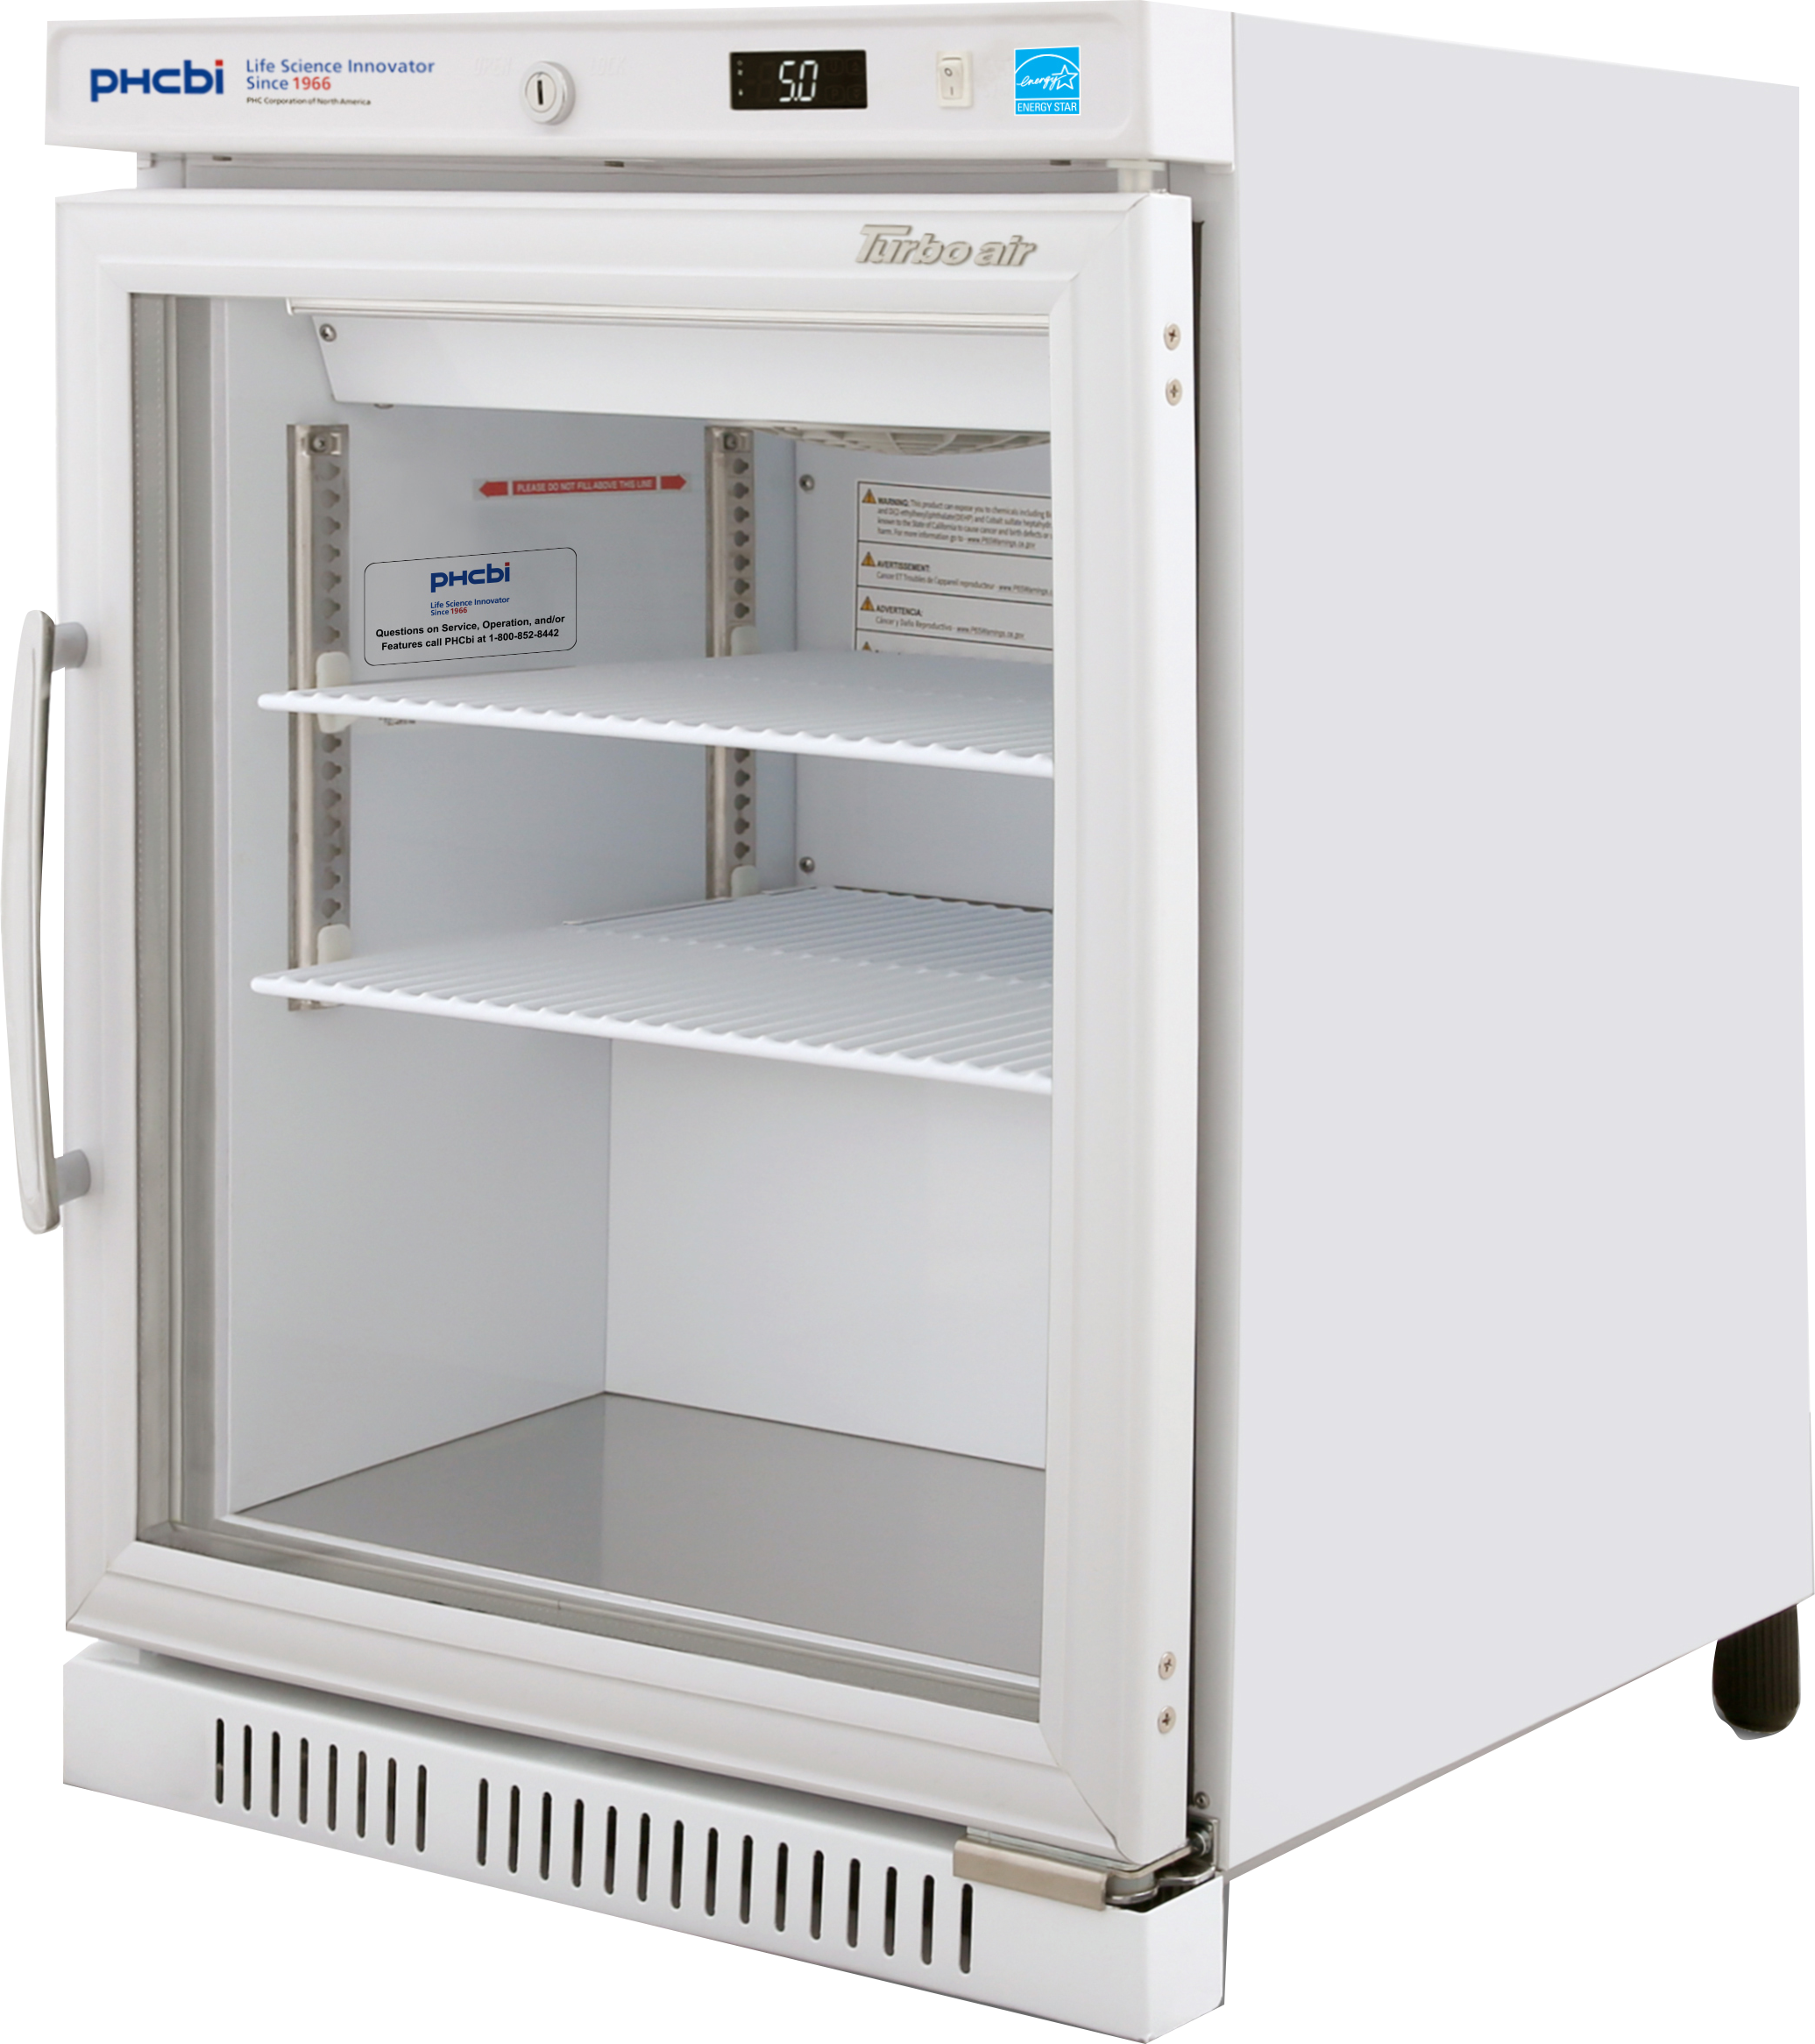 REF2-VAC vaccine refrigerator